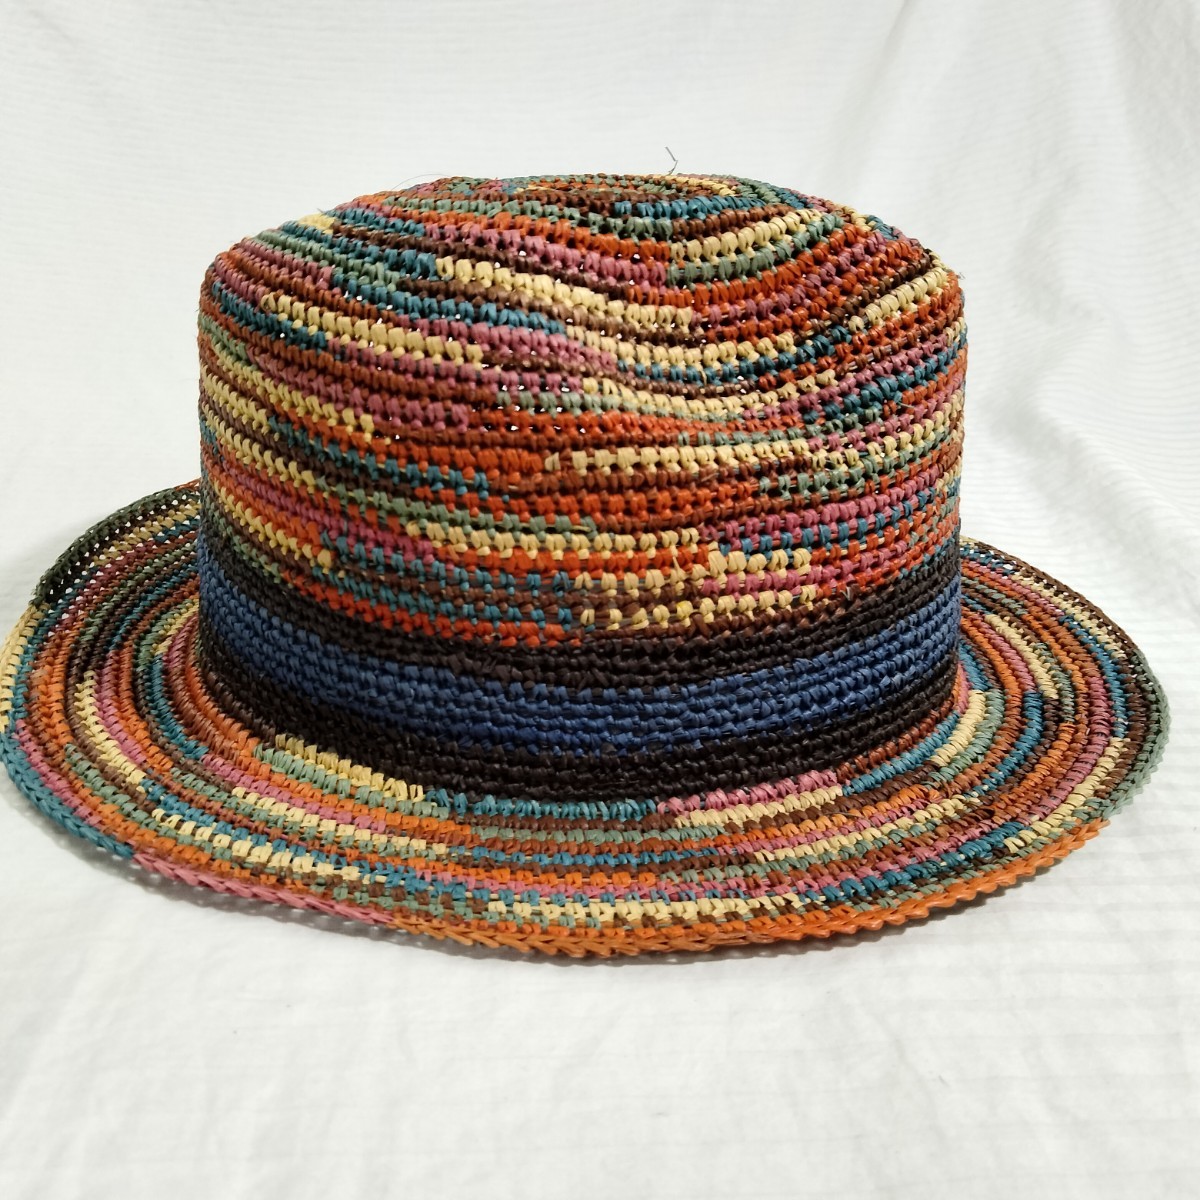 eka Anne Dino панама ma шляпа мягкая шляпа шляпа Ecua-Andino panama hat соломенная шляпа Mix цвет соломинка шляпа и мужчина и женщина 